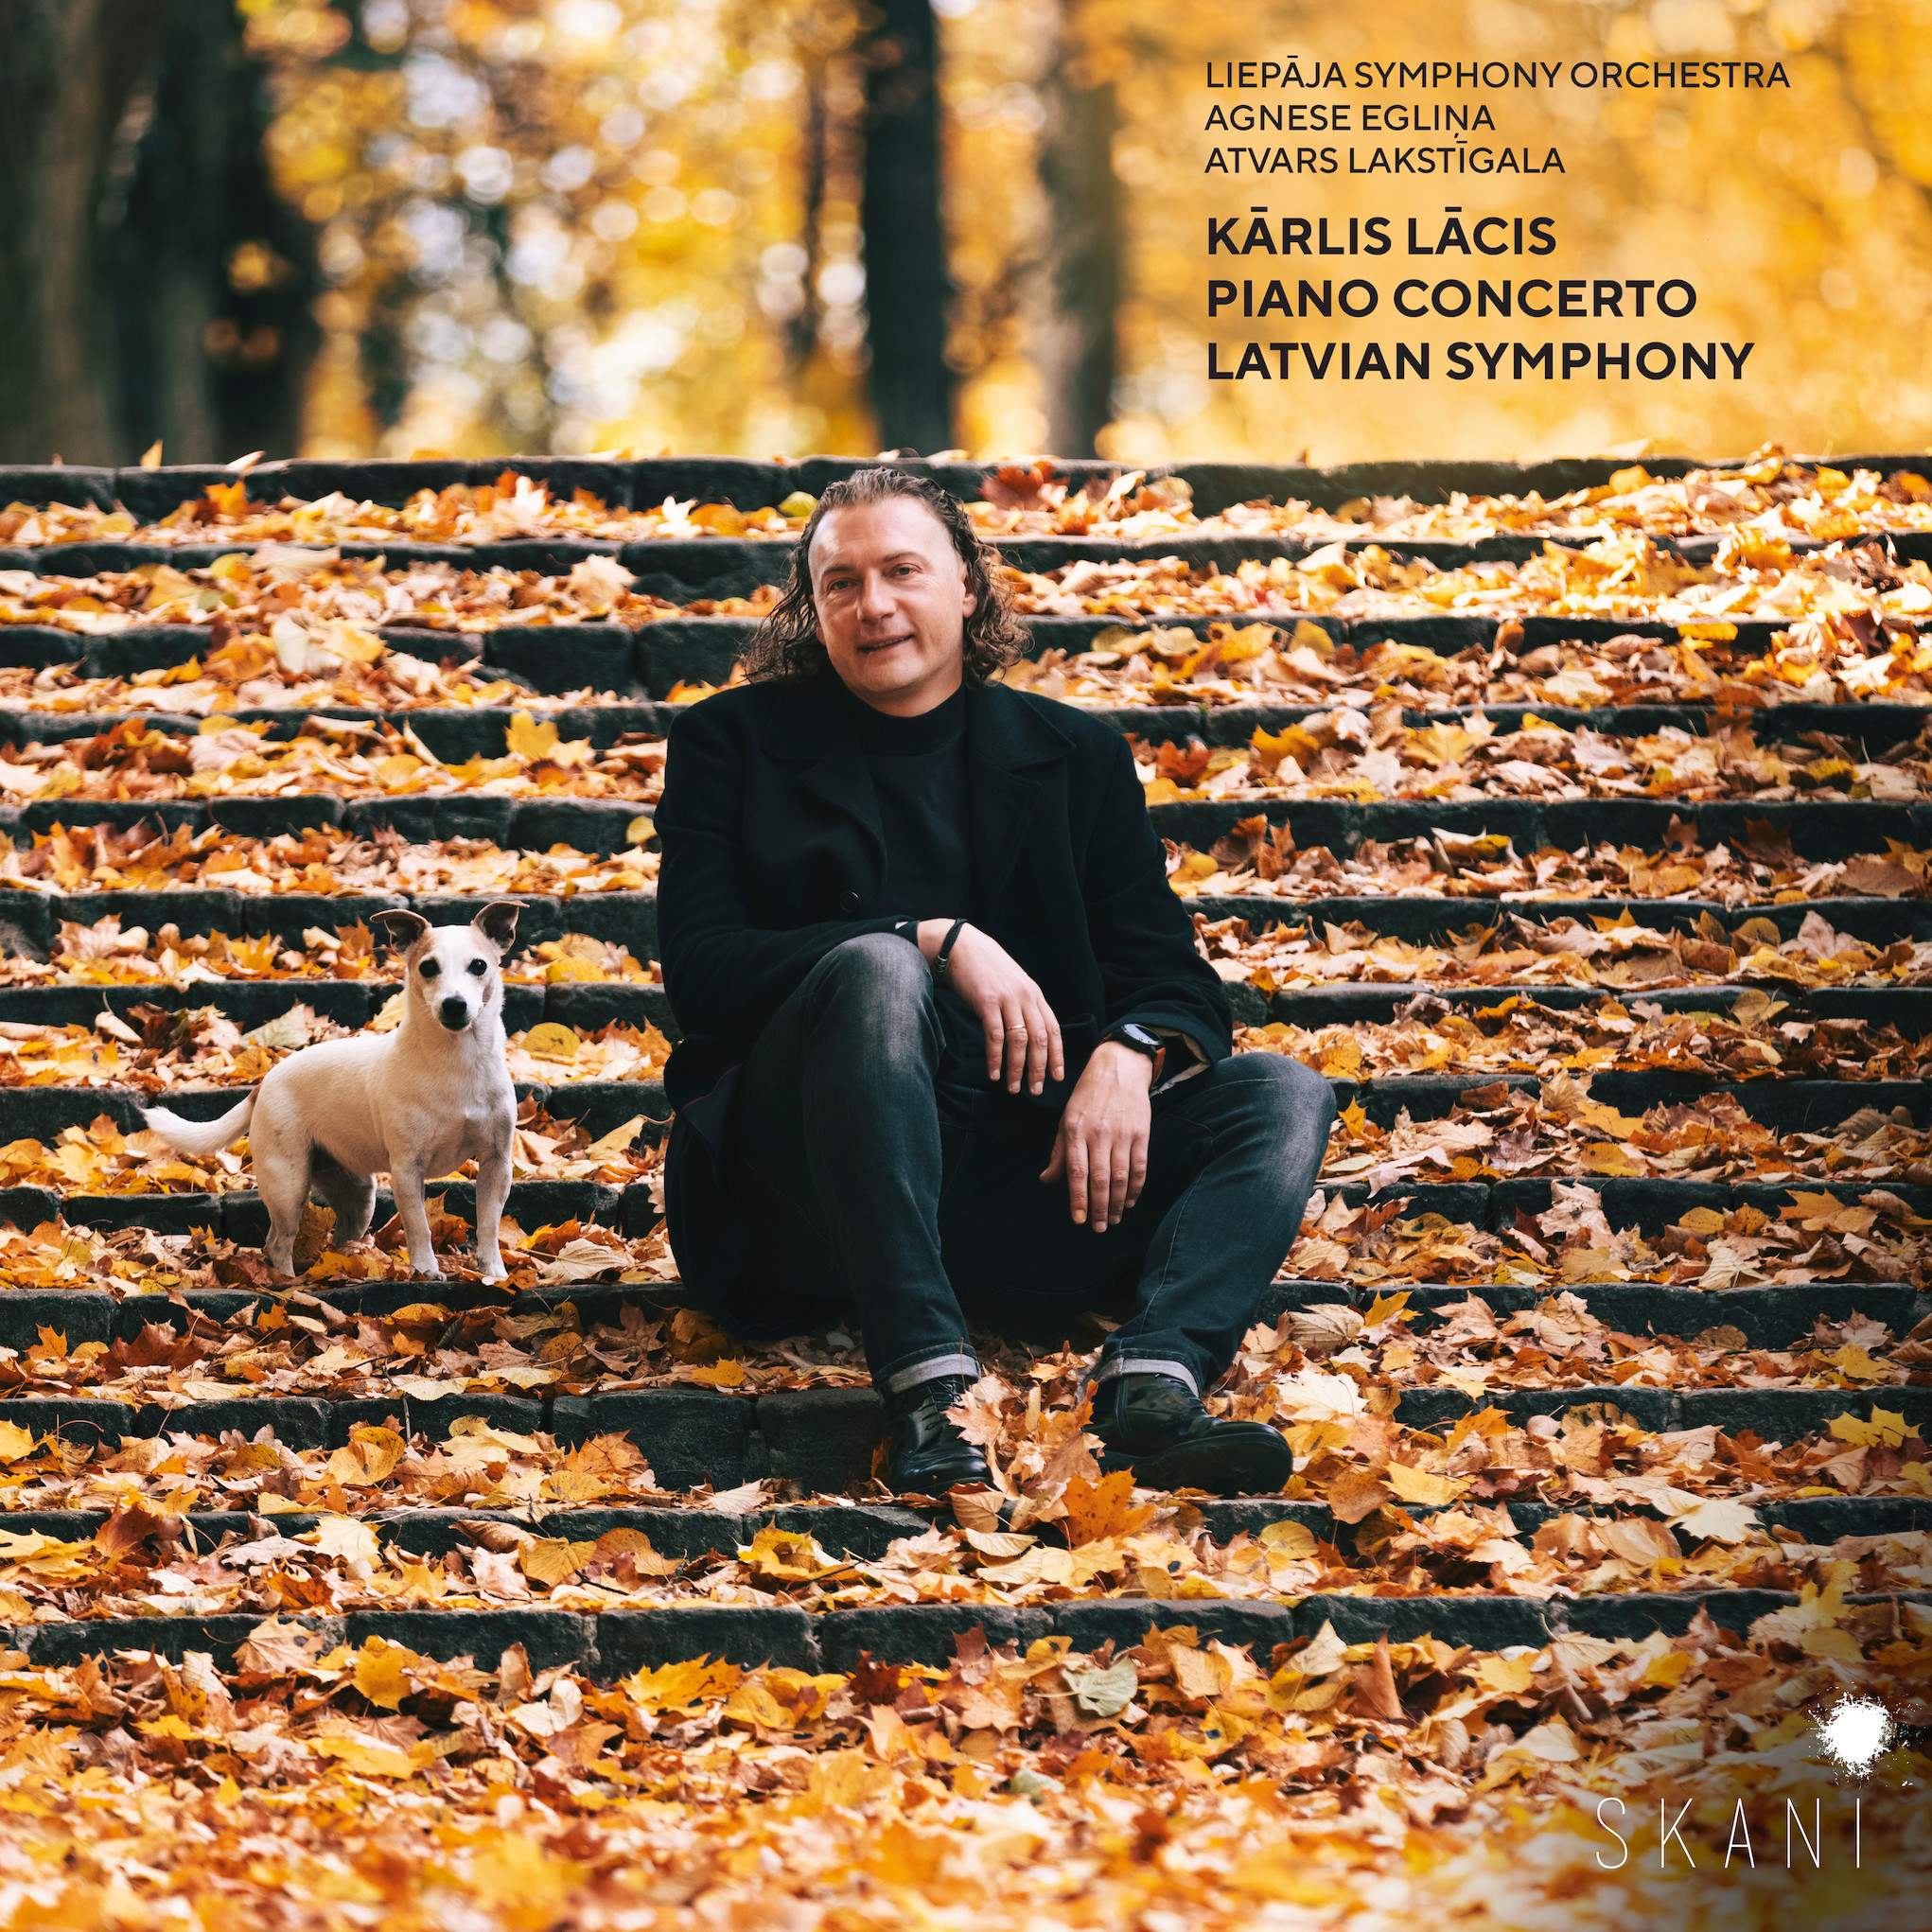 Kārlis Lācis: Piano Concerto, Latvian Symphony